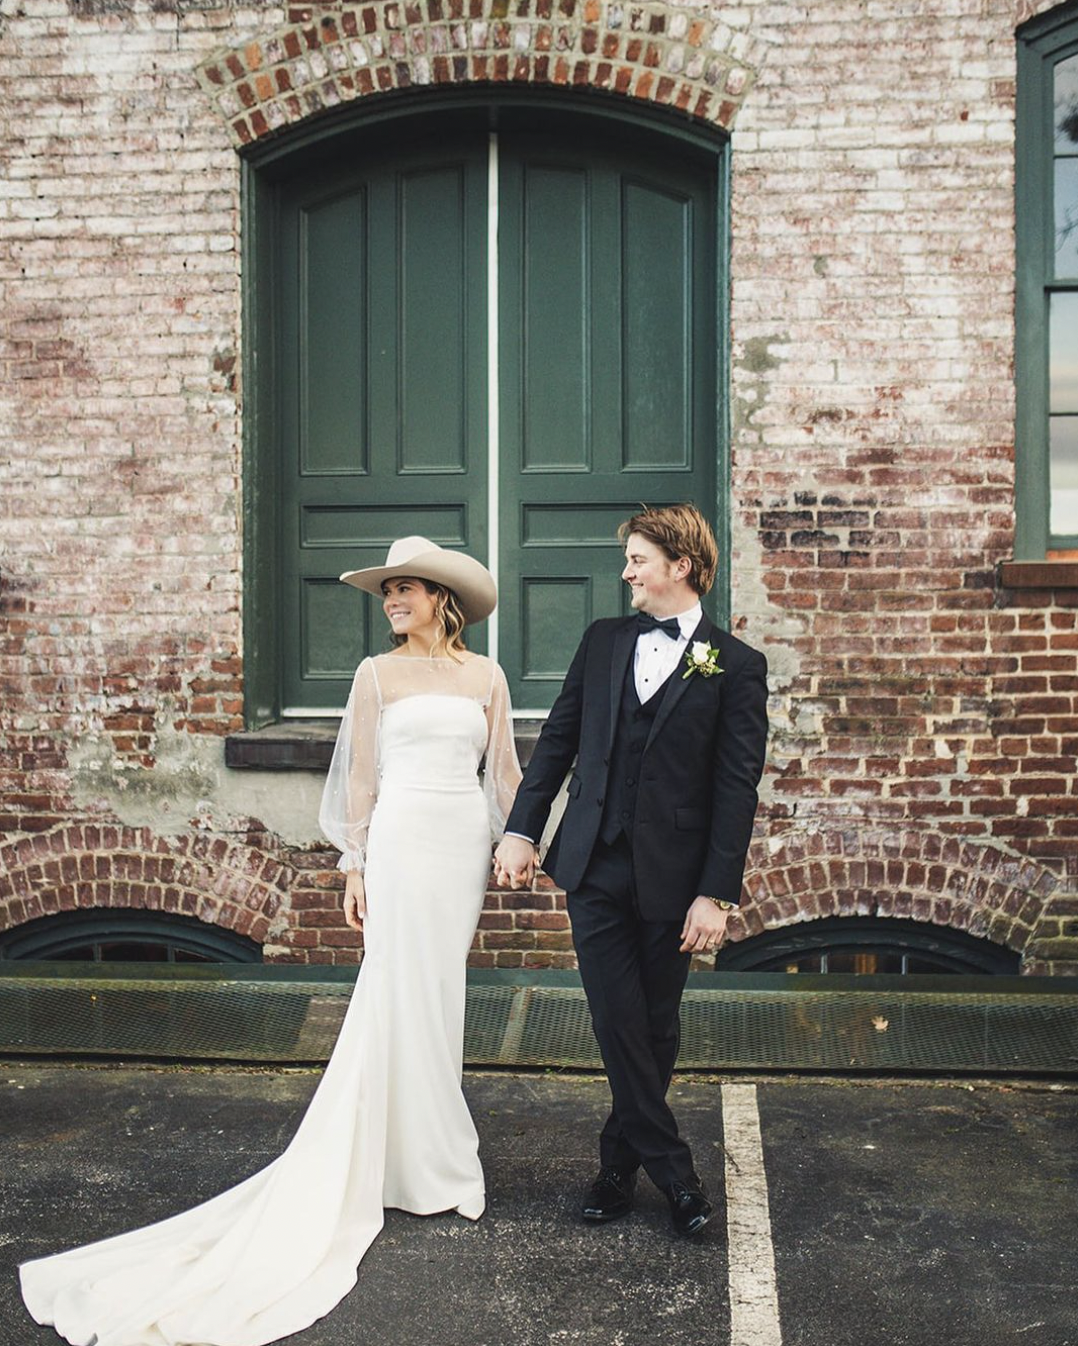 Best Wedding Dress Accessories for Fall Brides - GARNET + grace Bridal Salon